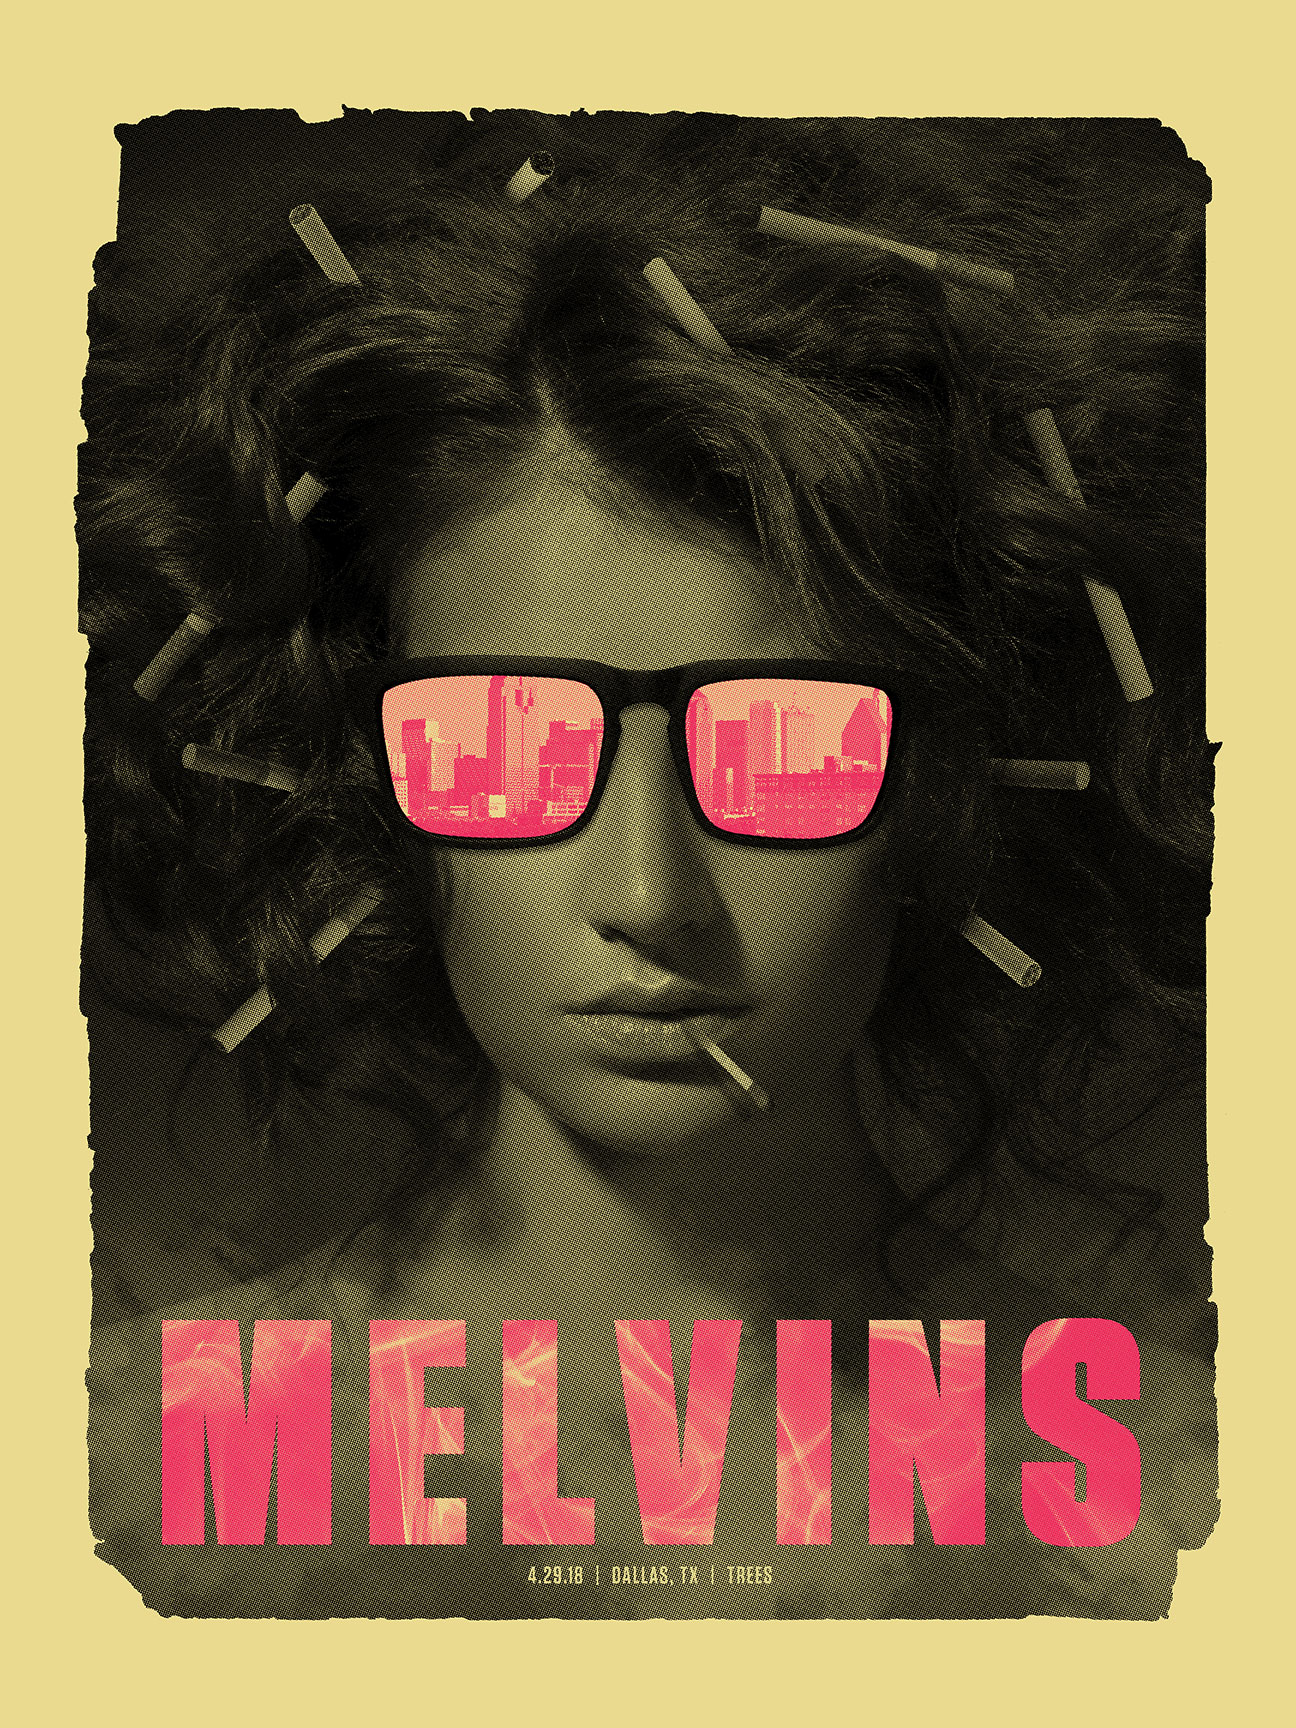  2018 Melvins Dallas Poster. Screen printed by Rebel Riot Inc. Digital variant shown here. 